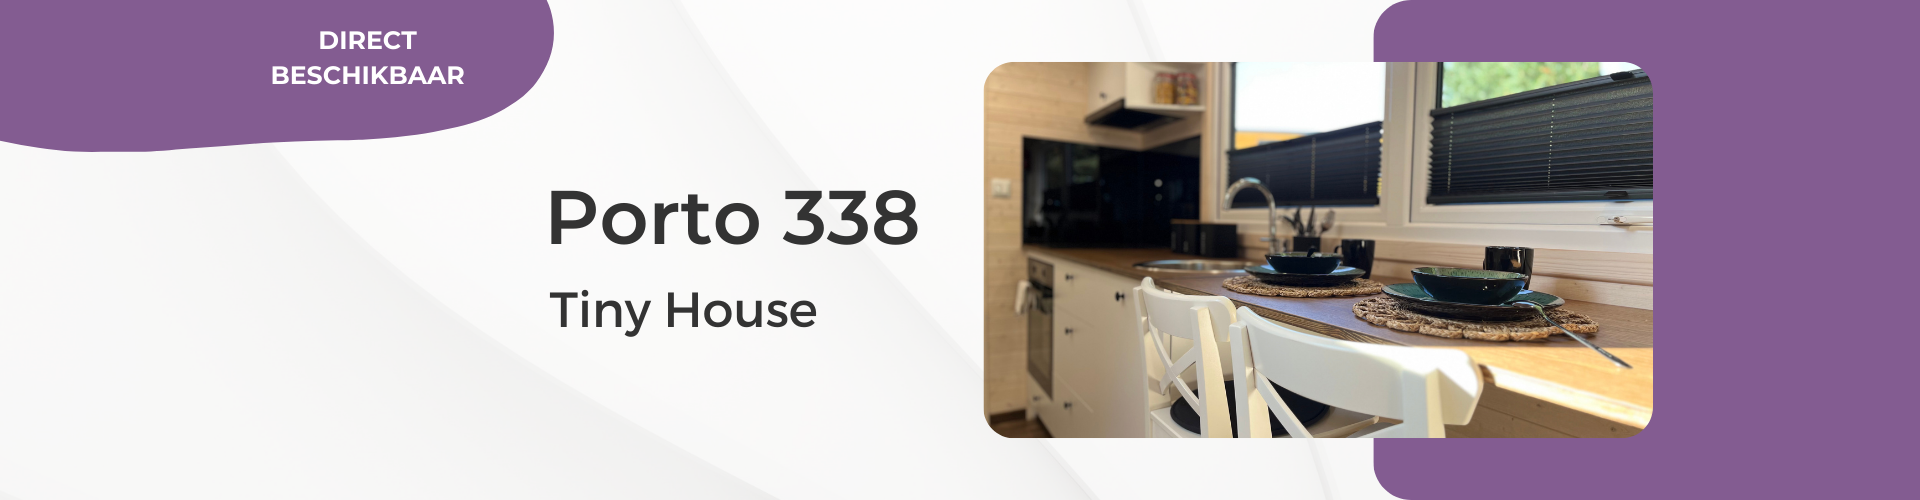 Tiny House Porto 338 direct beschikbaar